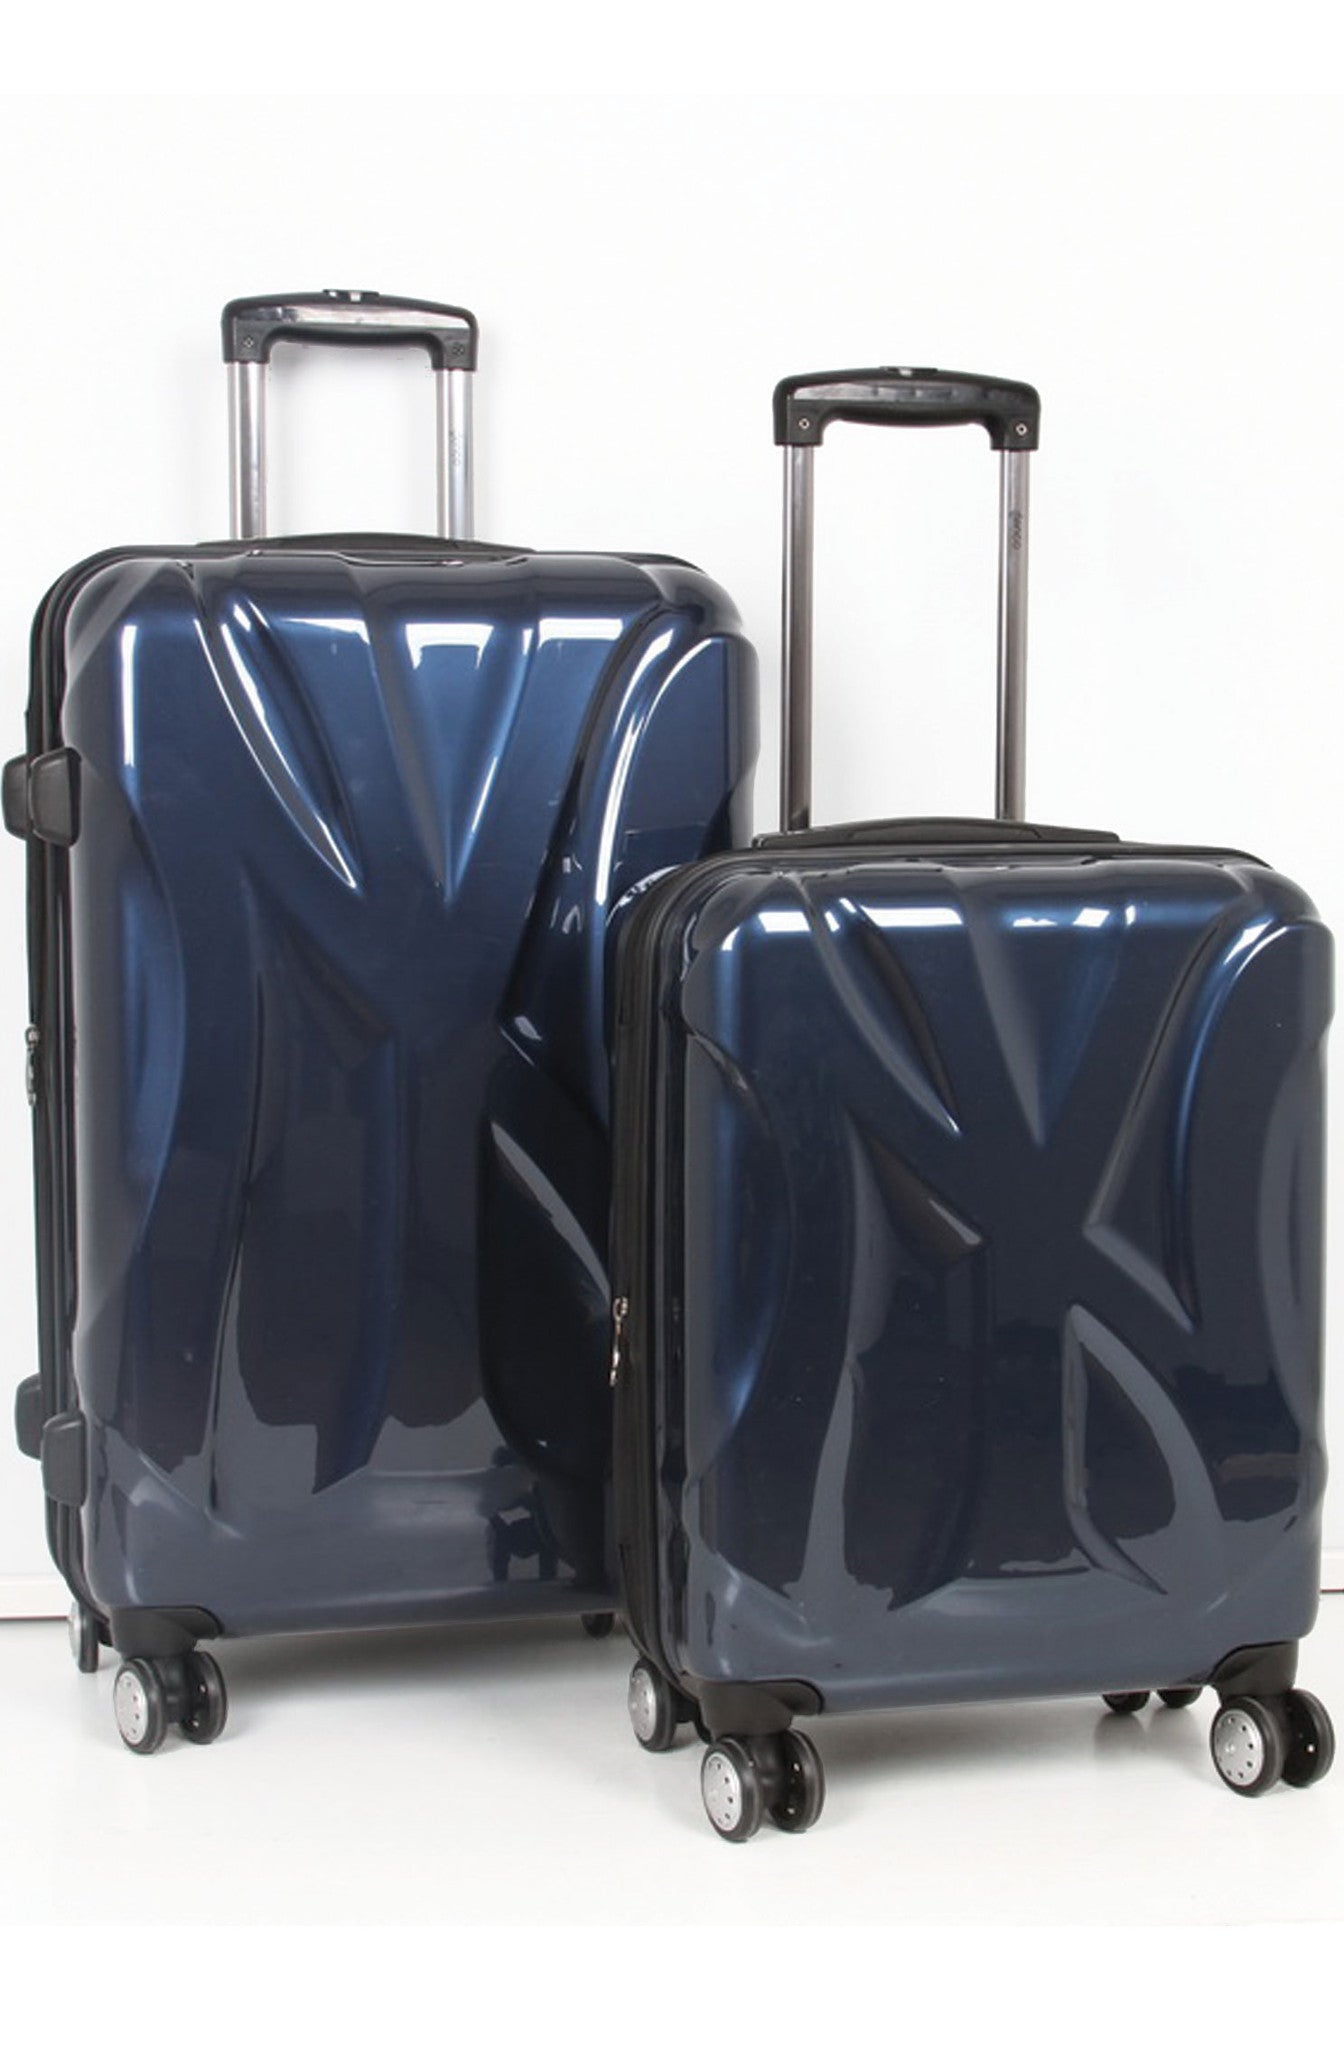 New York Yankees, 19" and 26" Premium Molded Luggage Set by Kaybull #NYY-PCF-SET - OBM Distribution, Inc.